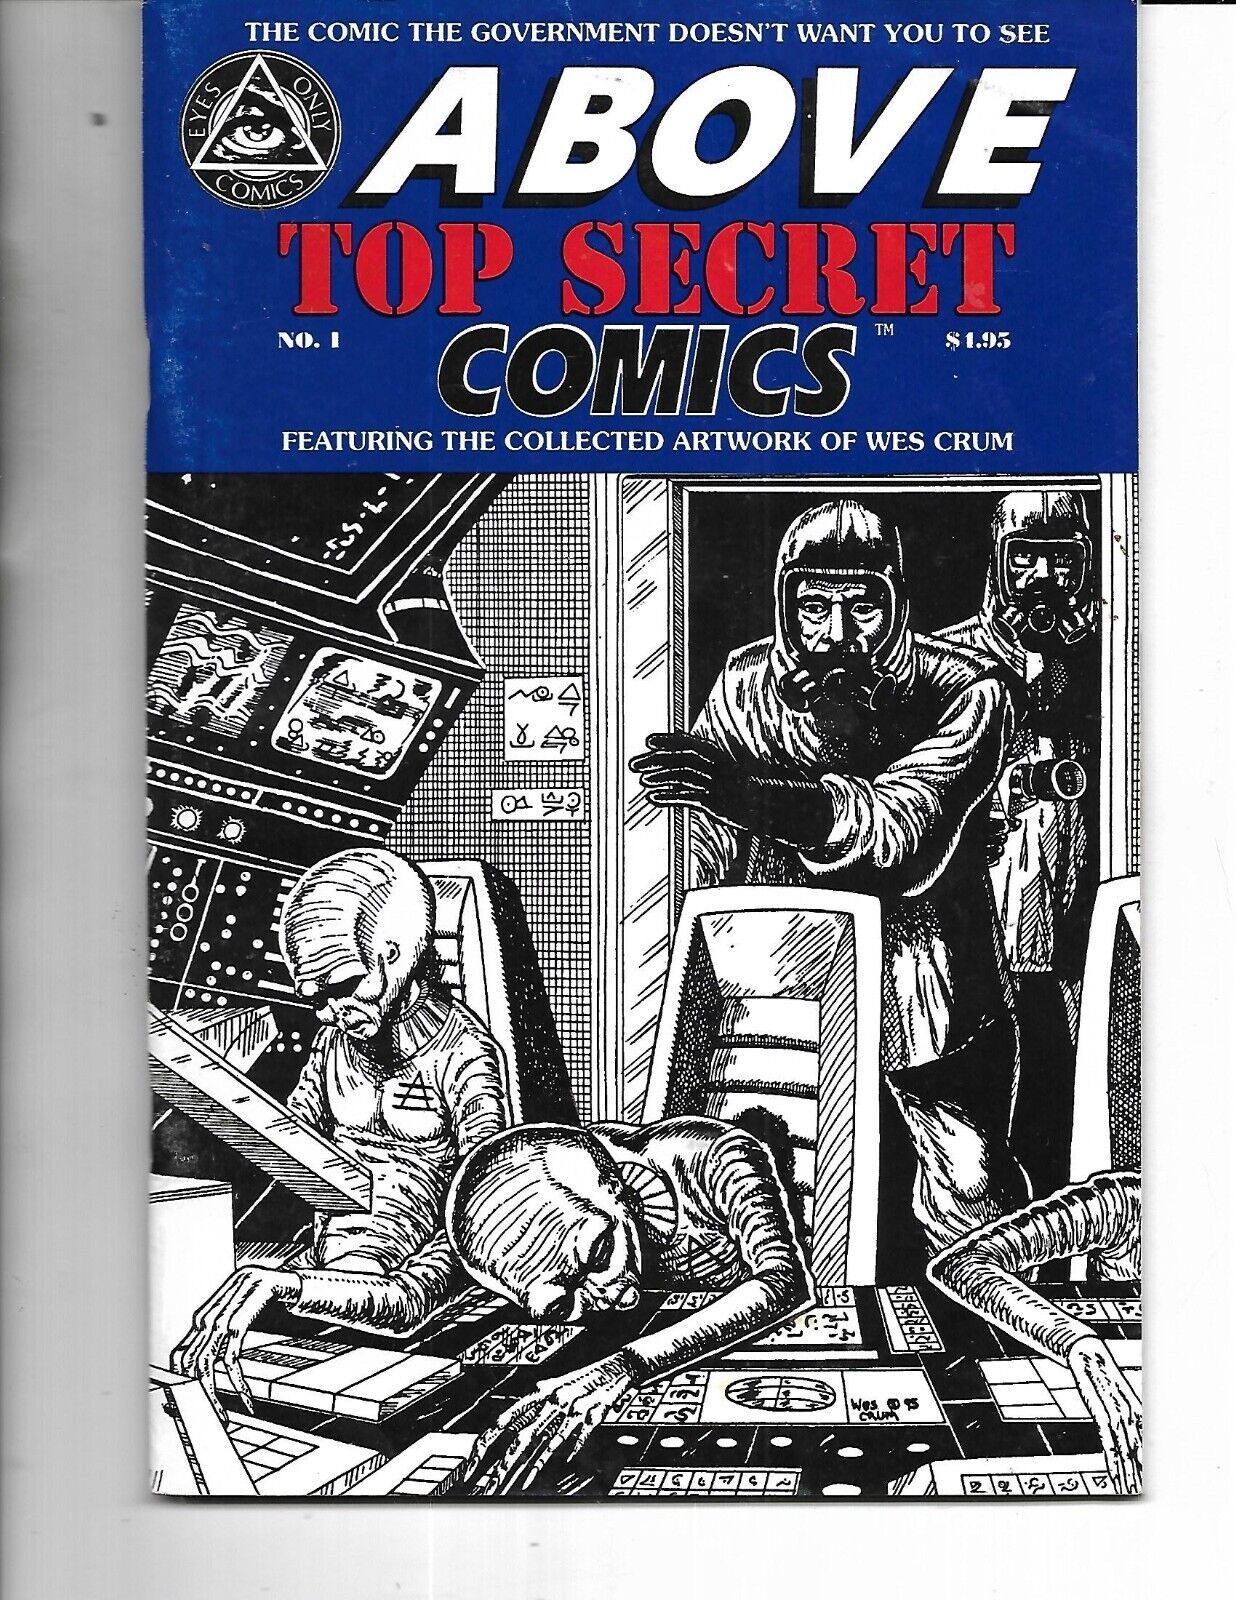 ABOVE TOP SECRET COMICS #1 - VERY GOOD PLUS COND.